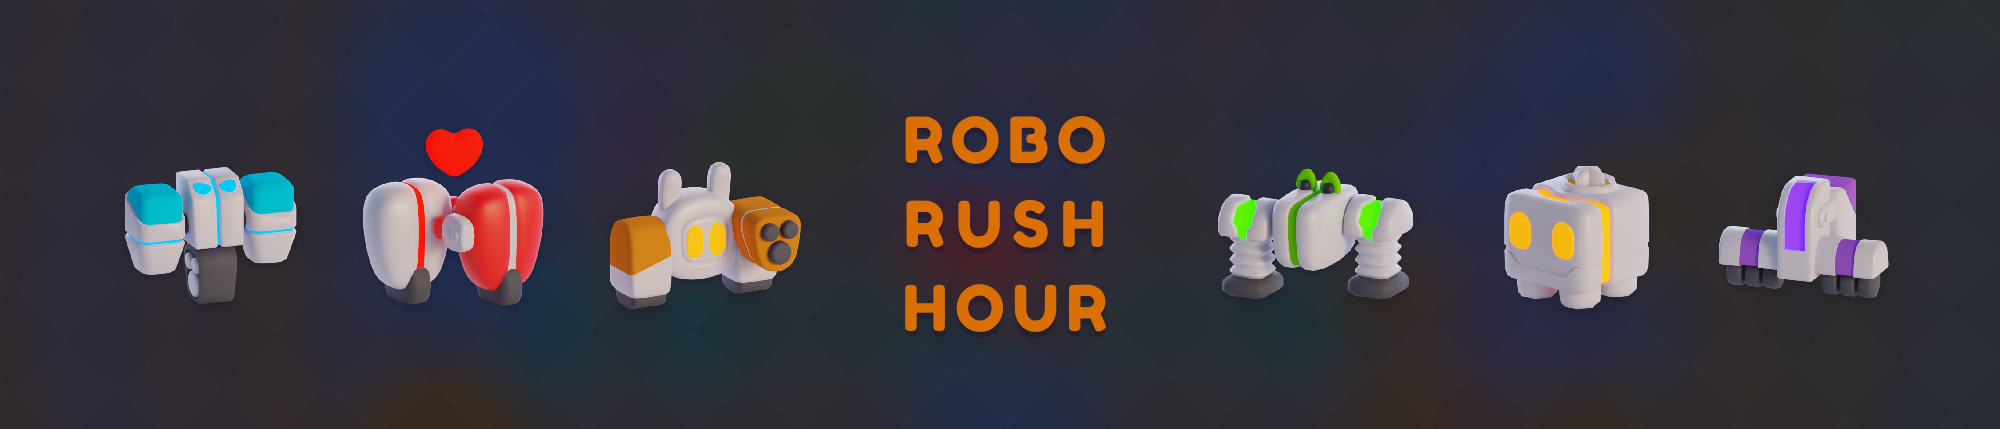 Robo Rush Hour